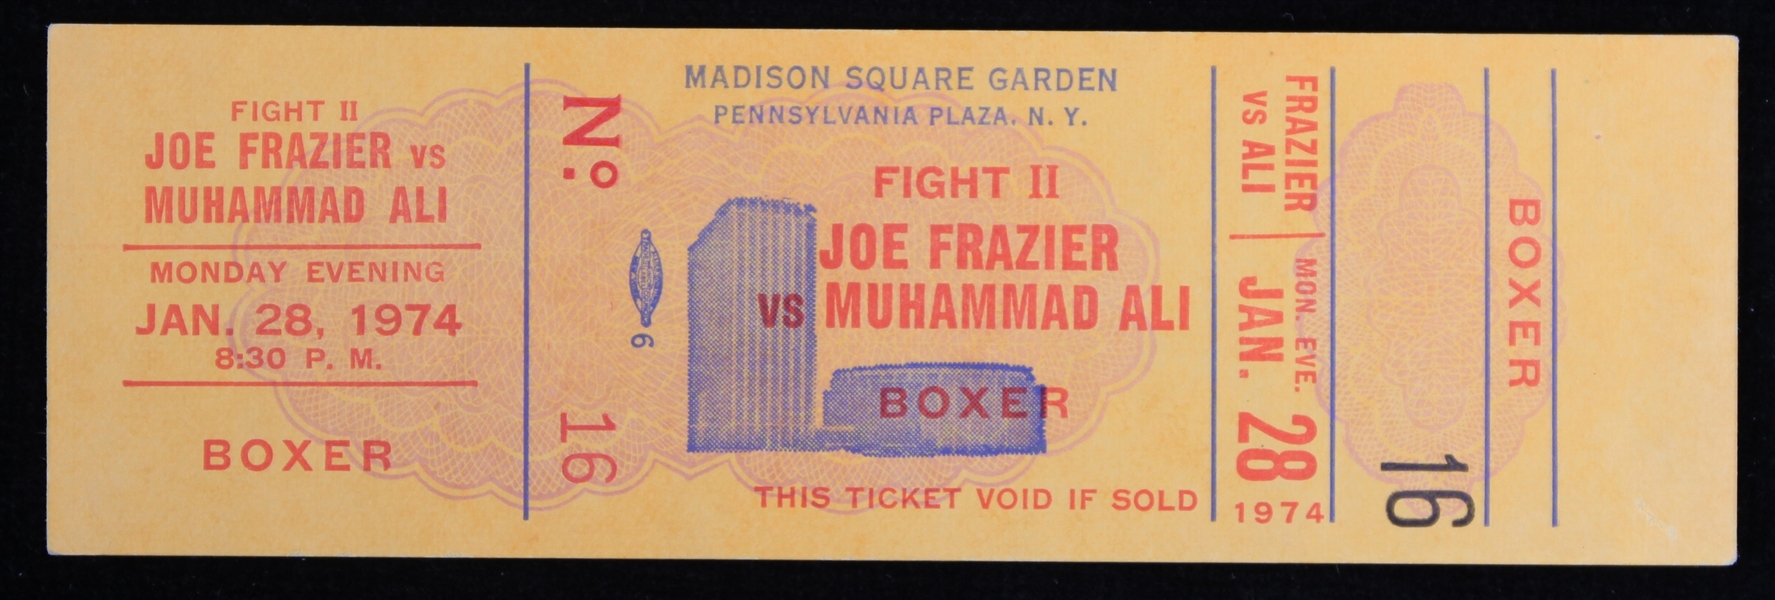 1974 Joe Frazier vs Muhammad Ali Fight II Madison Square Garden Full Onsite Ticket 